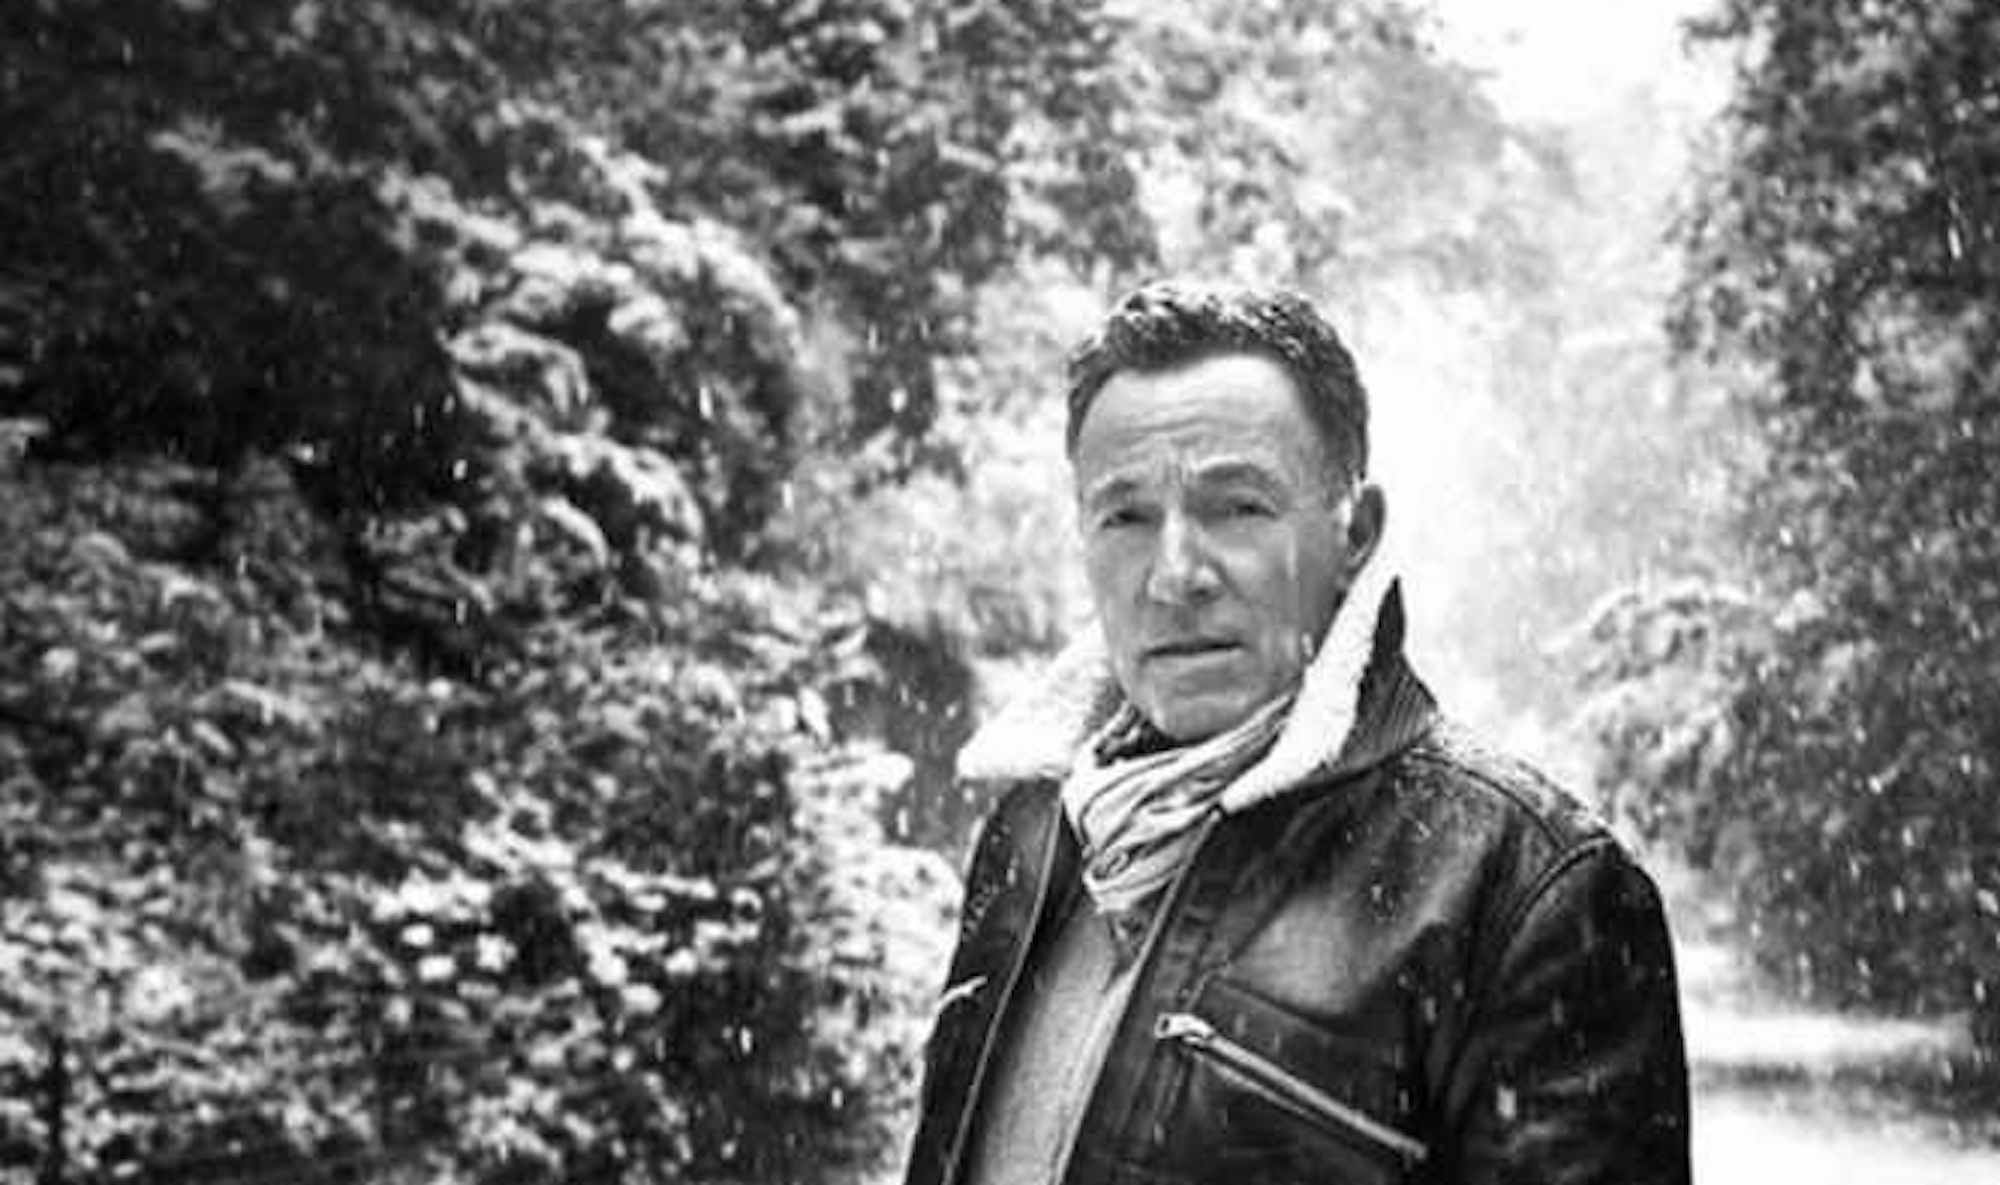 Bruce Springsteen Teases Western Themed 21st Album, Plays Four-Song Folk Set